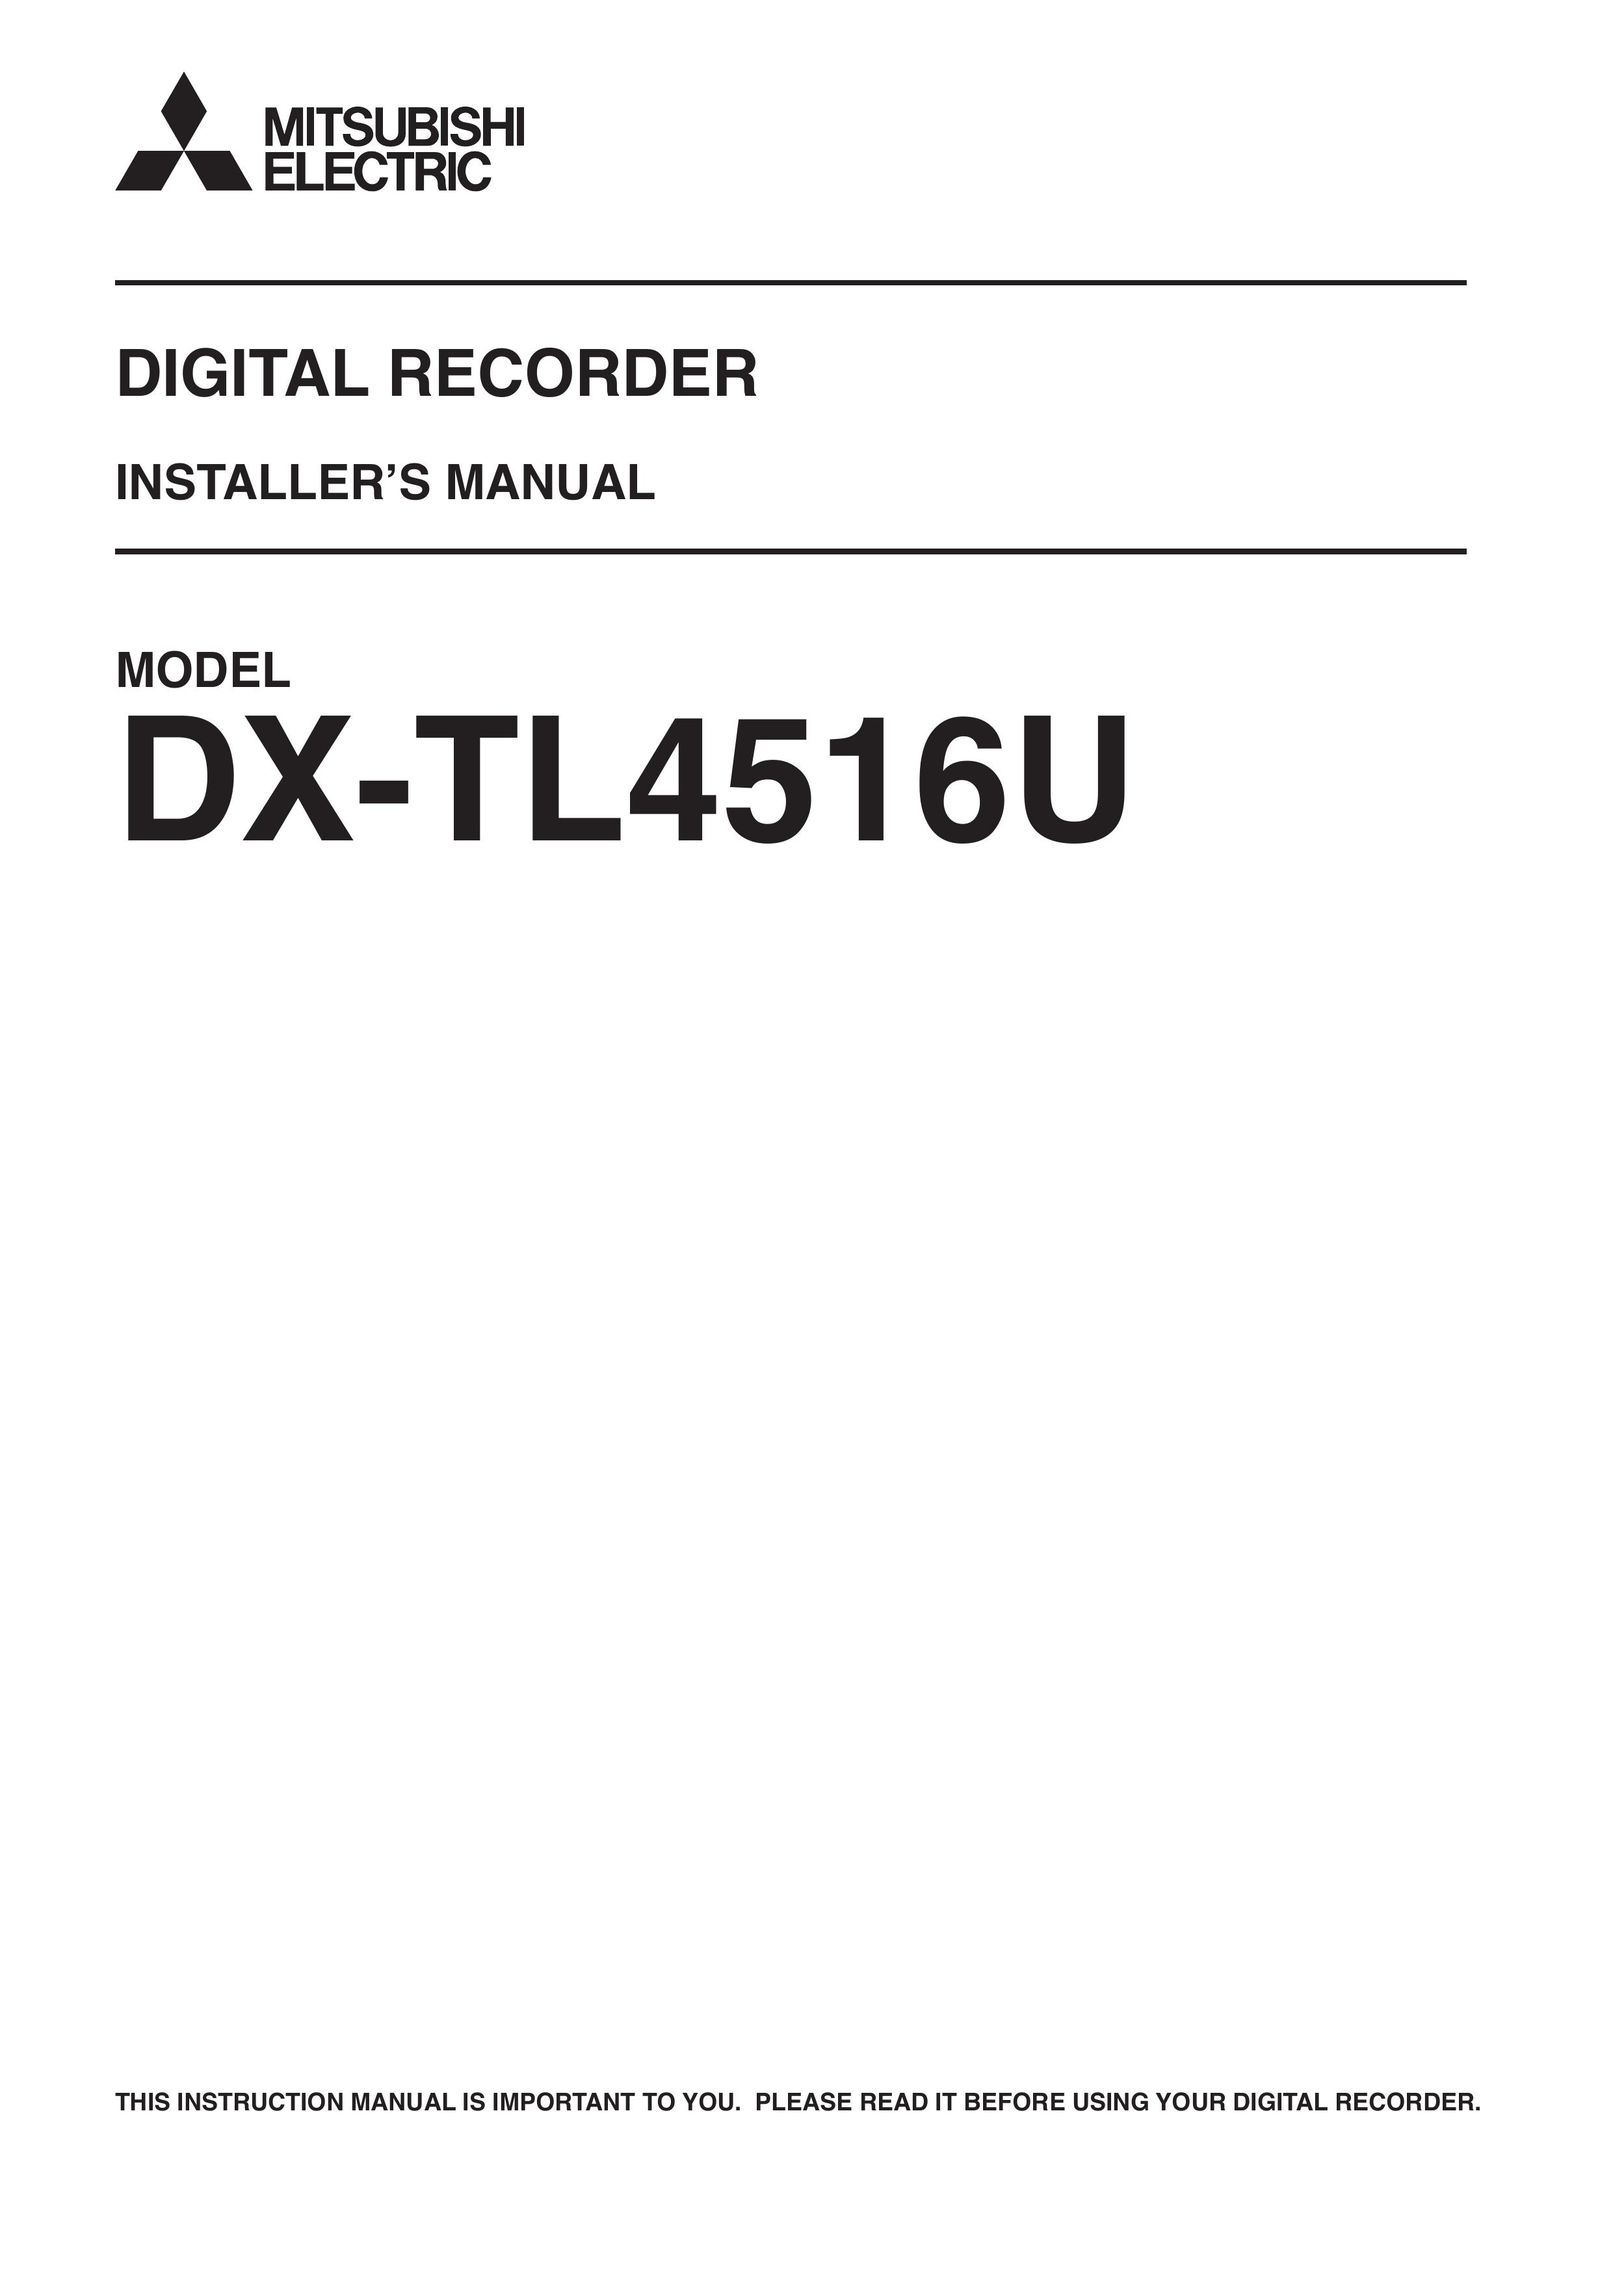 Mitsubishi Electronics DX-TL4516U DVR User Manual